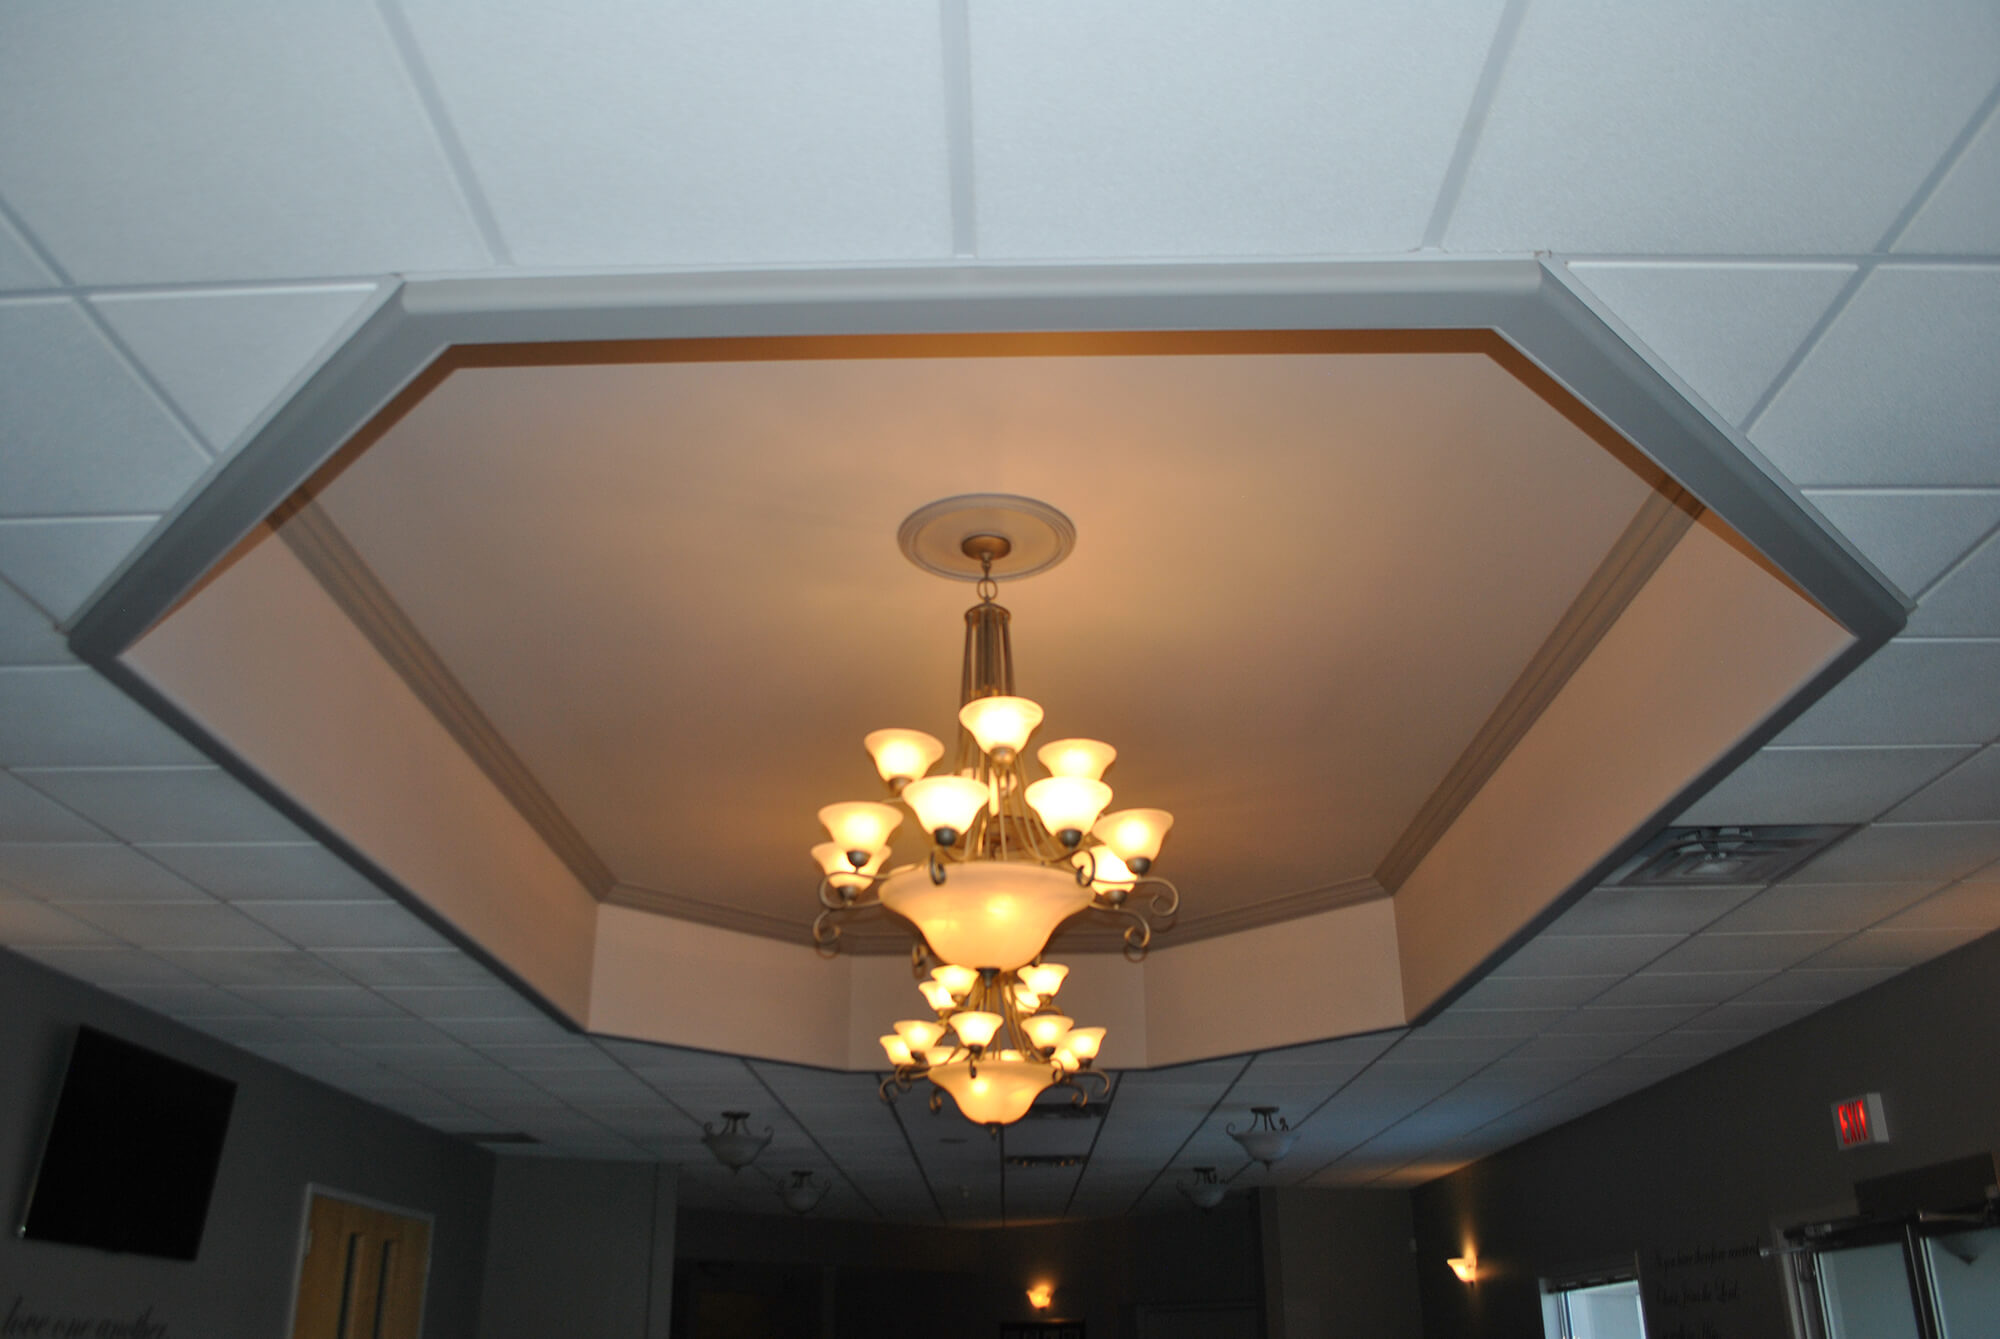 inset ceiling